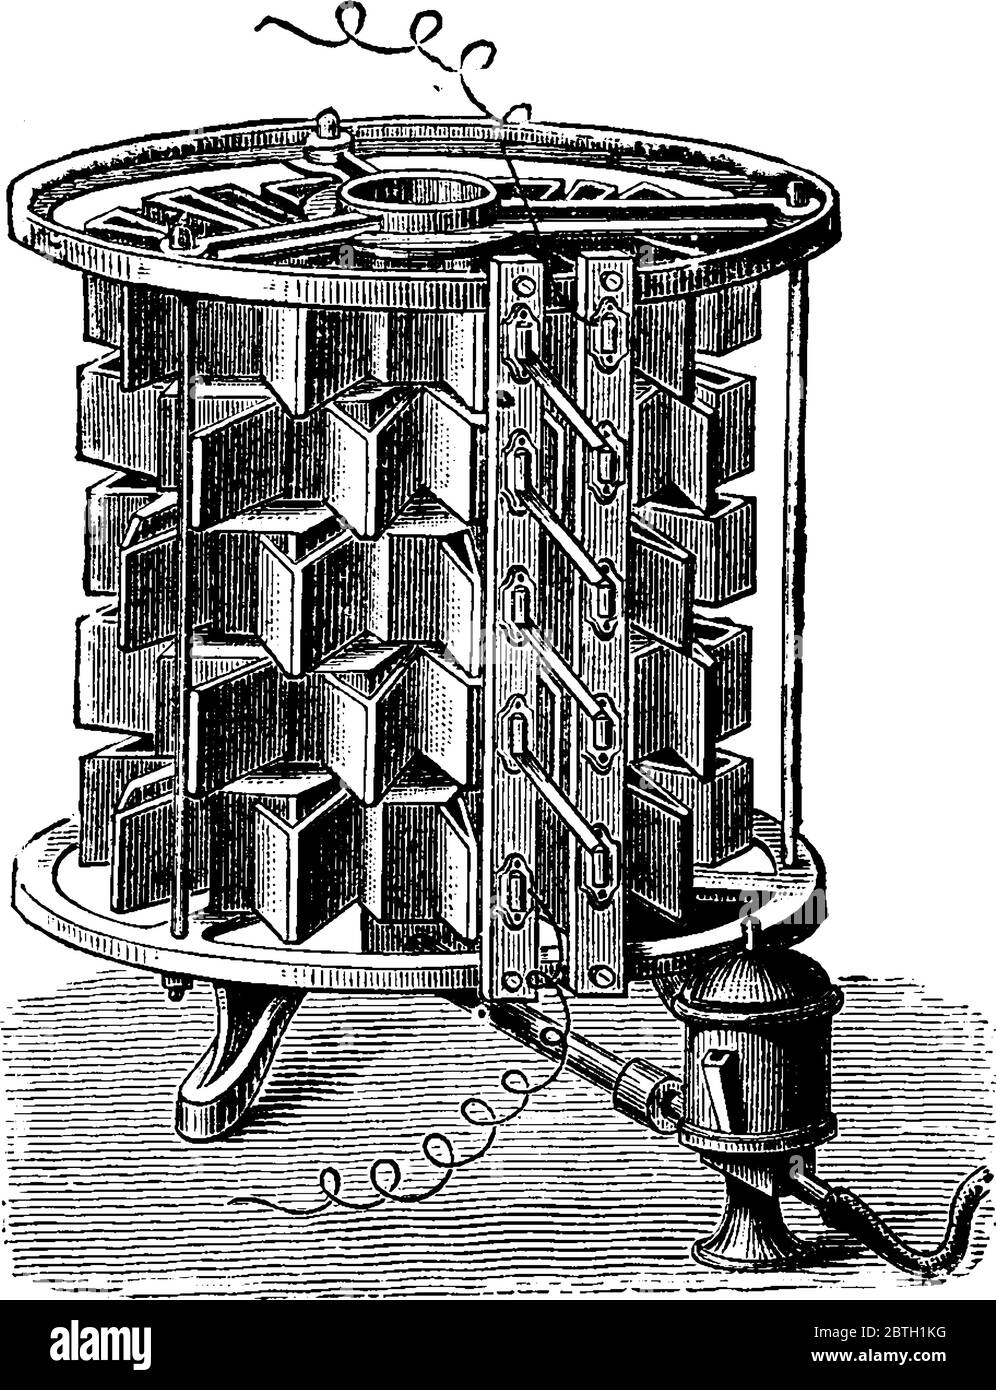 Vanne thermostatique — Wikipédia